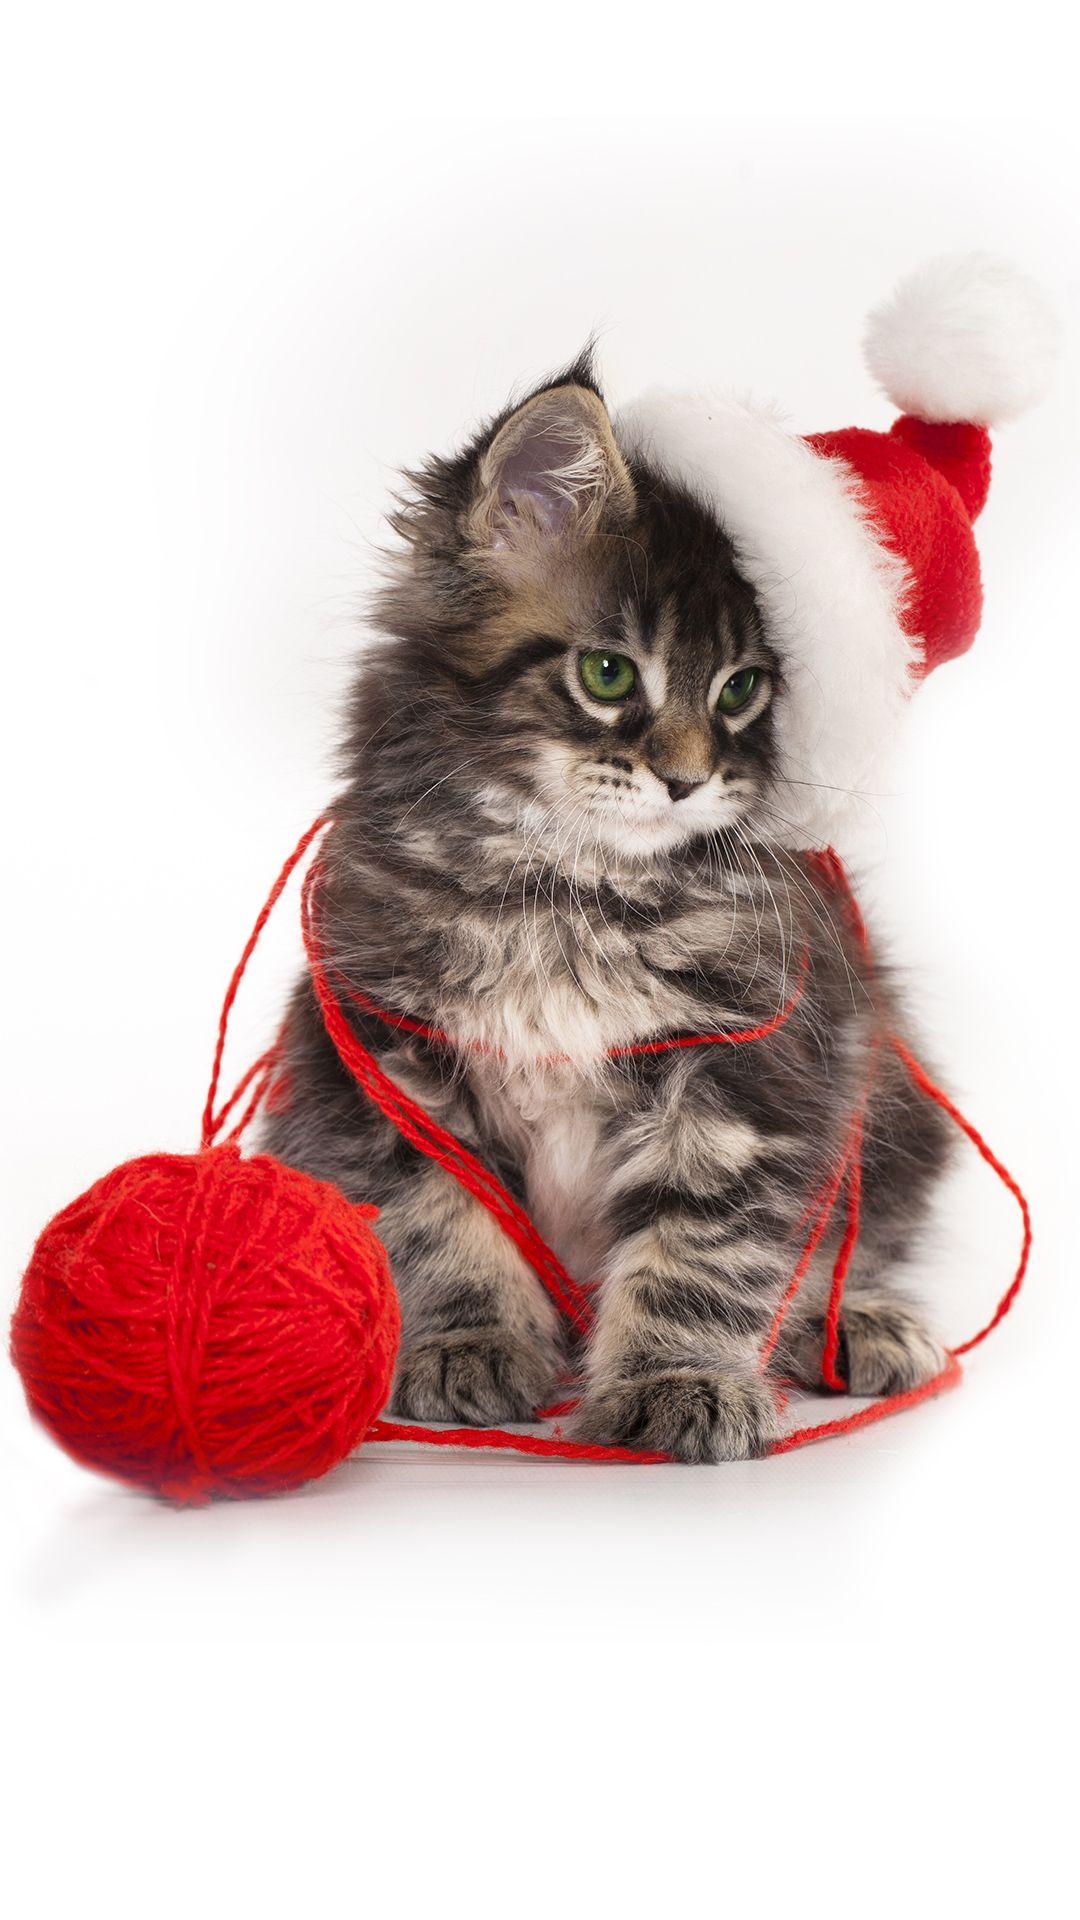 Christmas Kitten iPhone 6S Plus Wallpaper